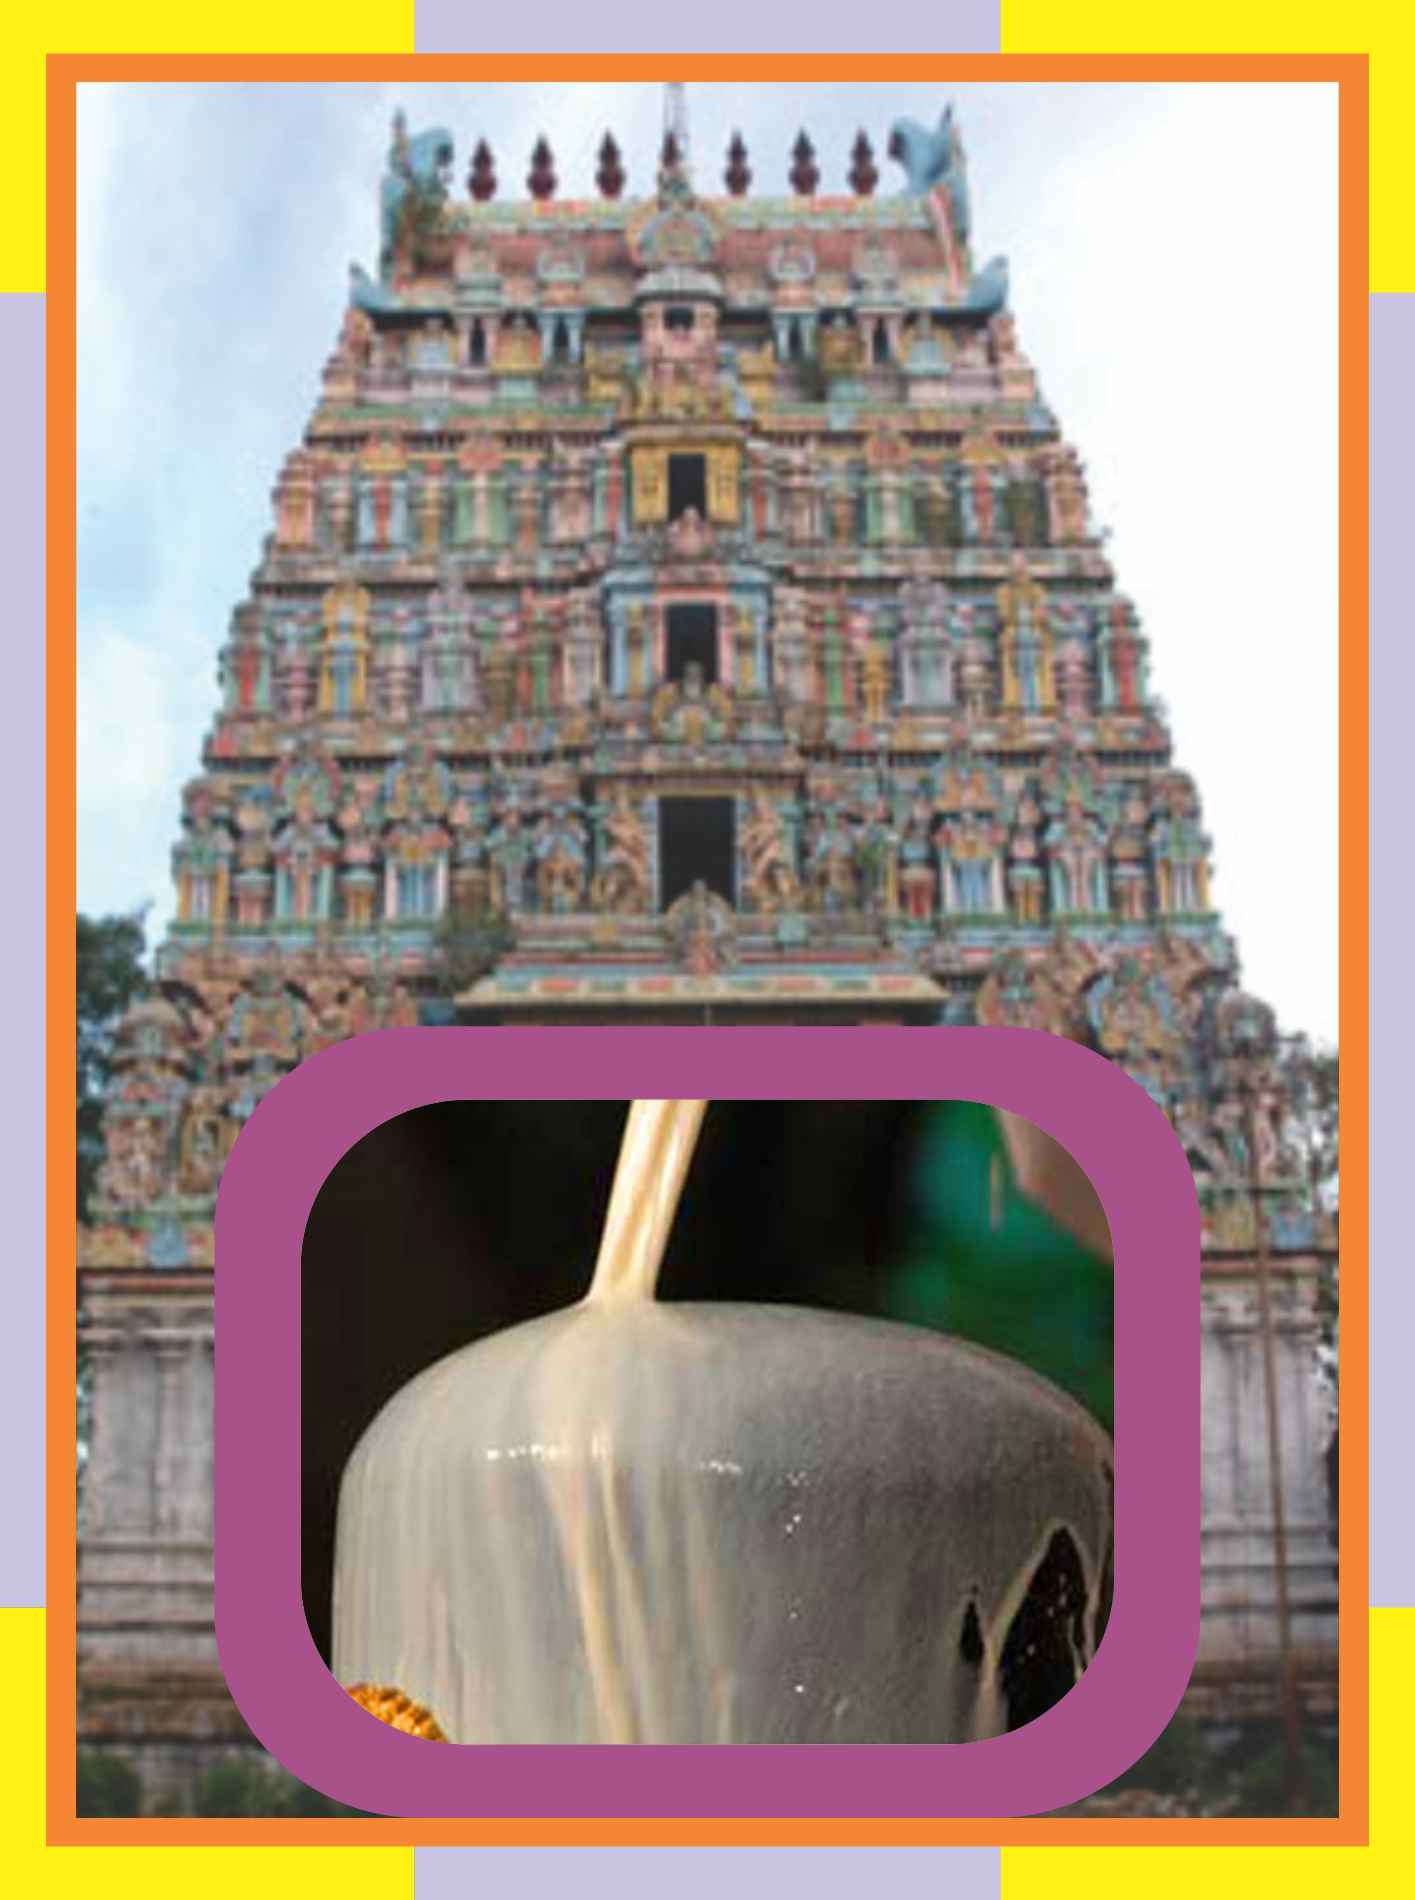 Kattarimangalam - Natarajar Temple Spl Puja for Lord Natarajar